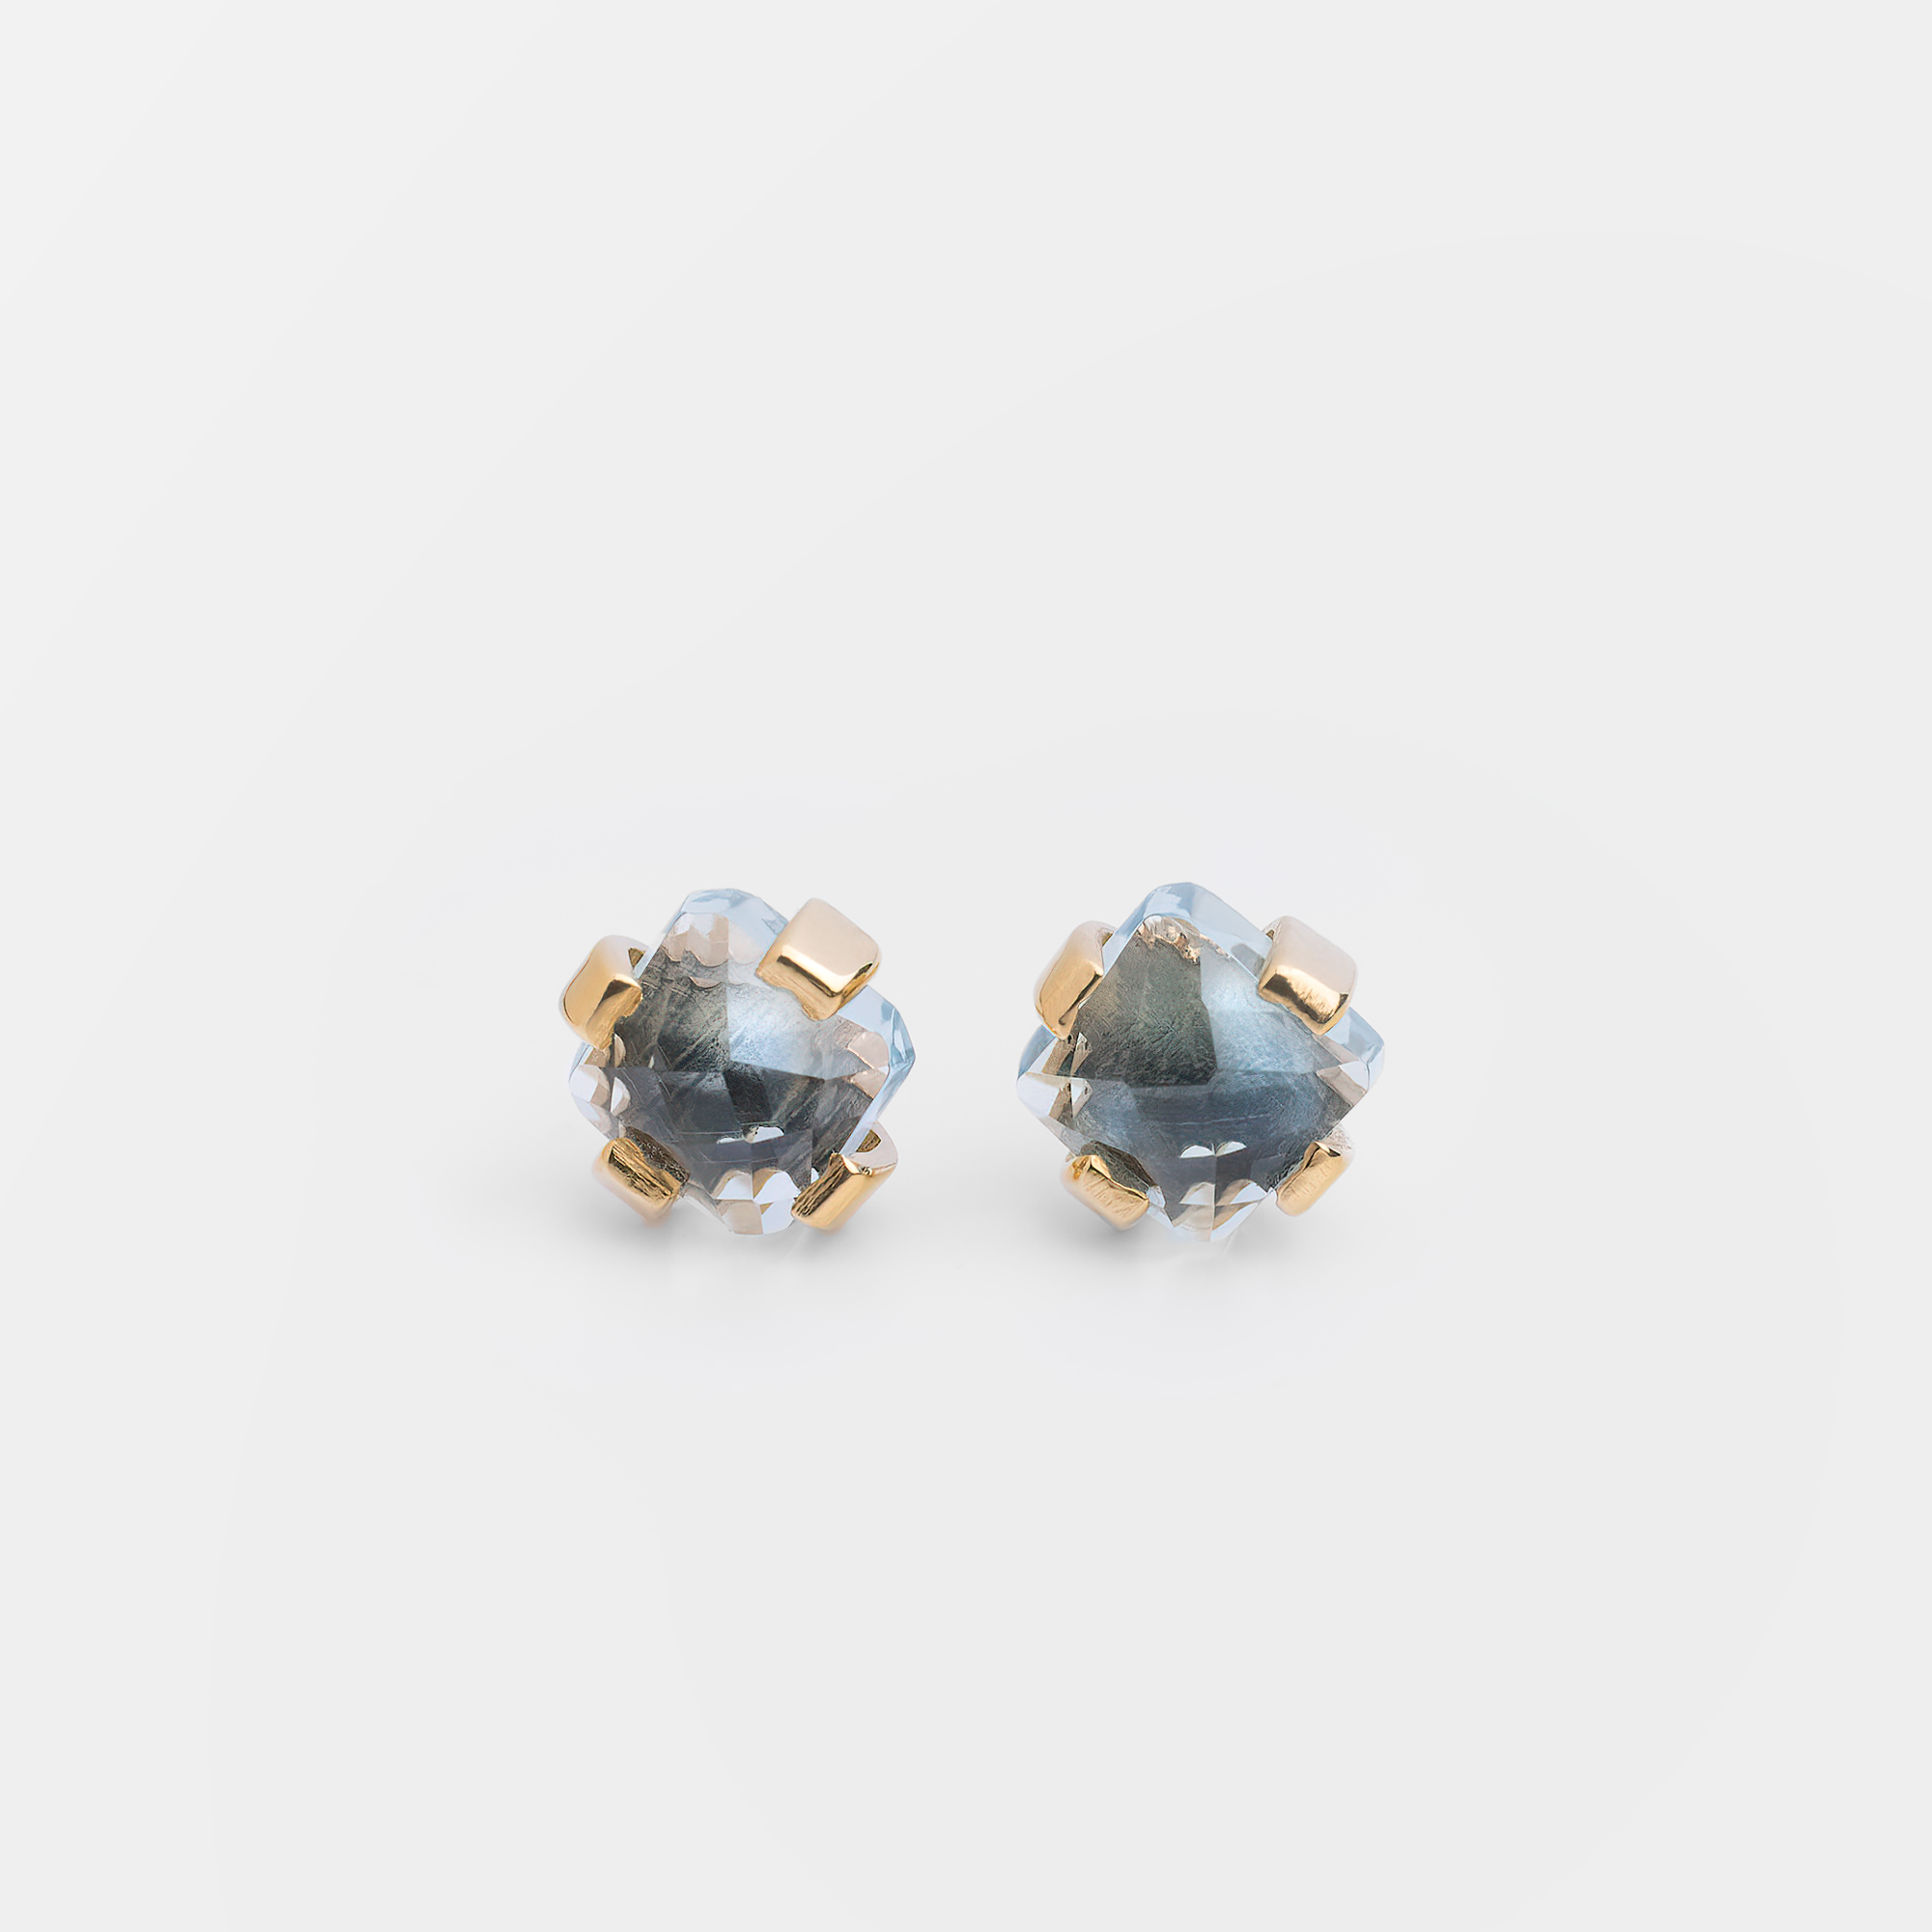 Vanna - 18K Gold Vermeil Blue Topaz Earrings - Zafeer